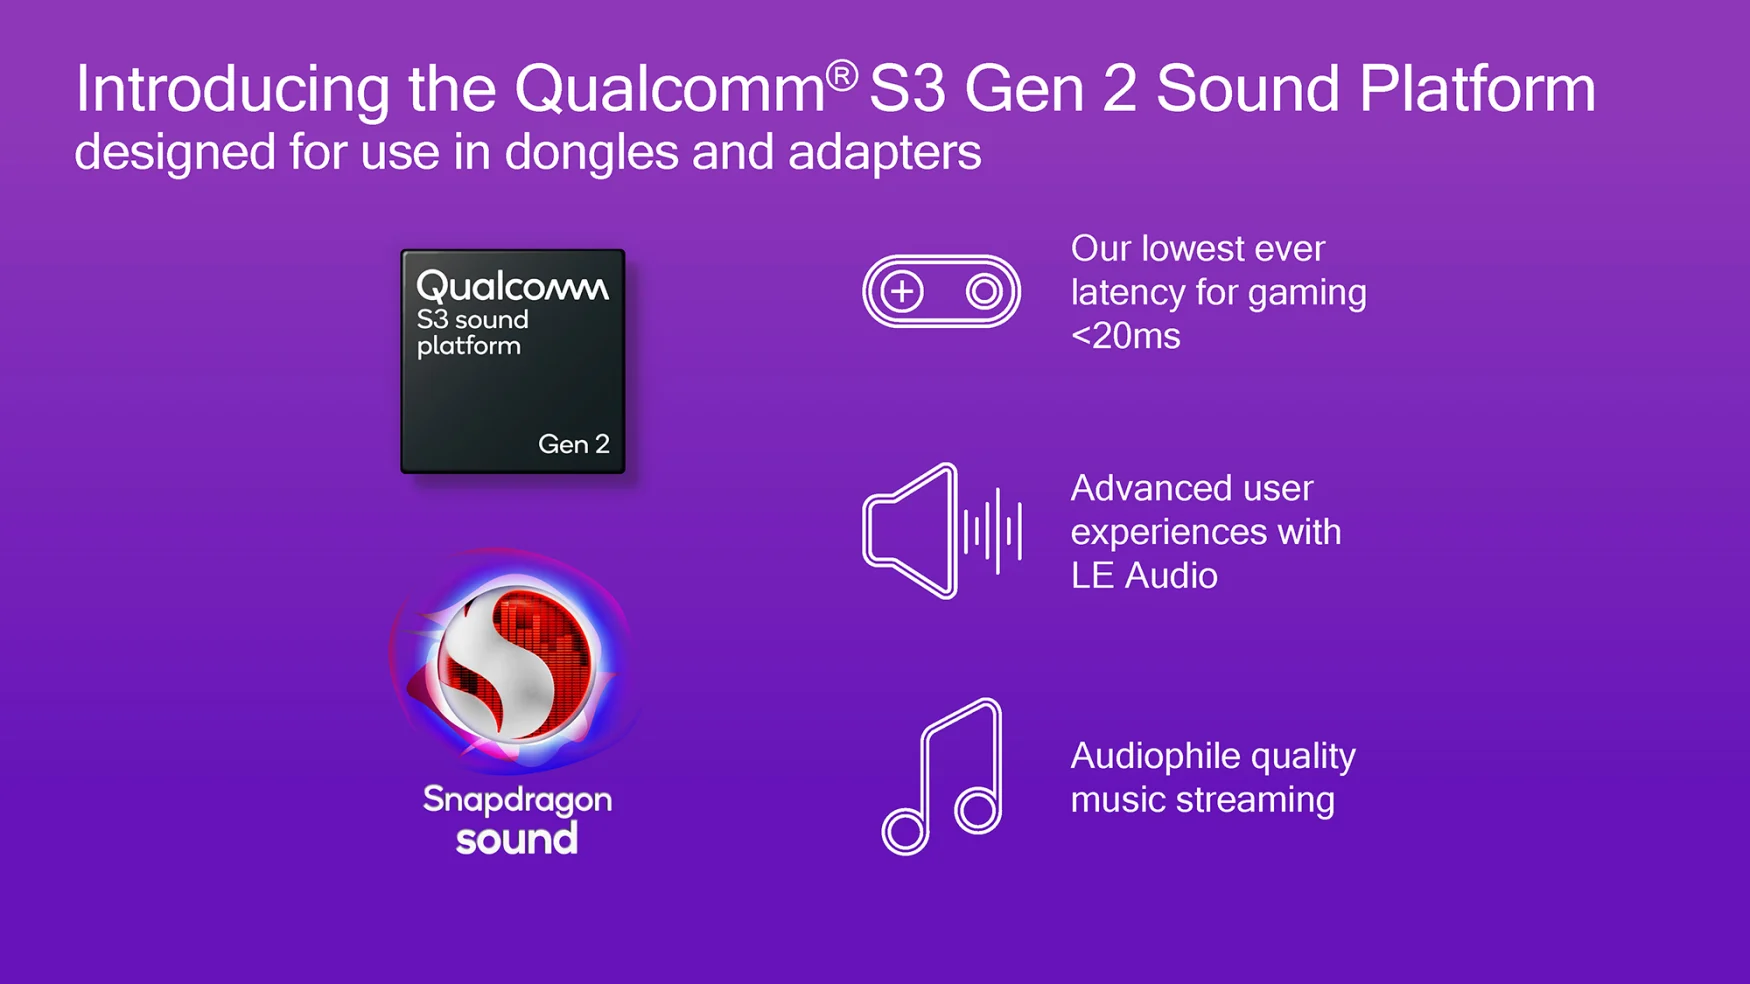 Slide demonstrating the Qualcomm S3 Gen 2 Sound platform. It advertises 